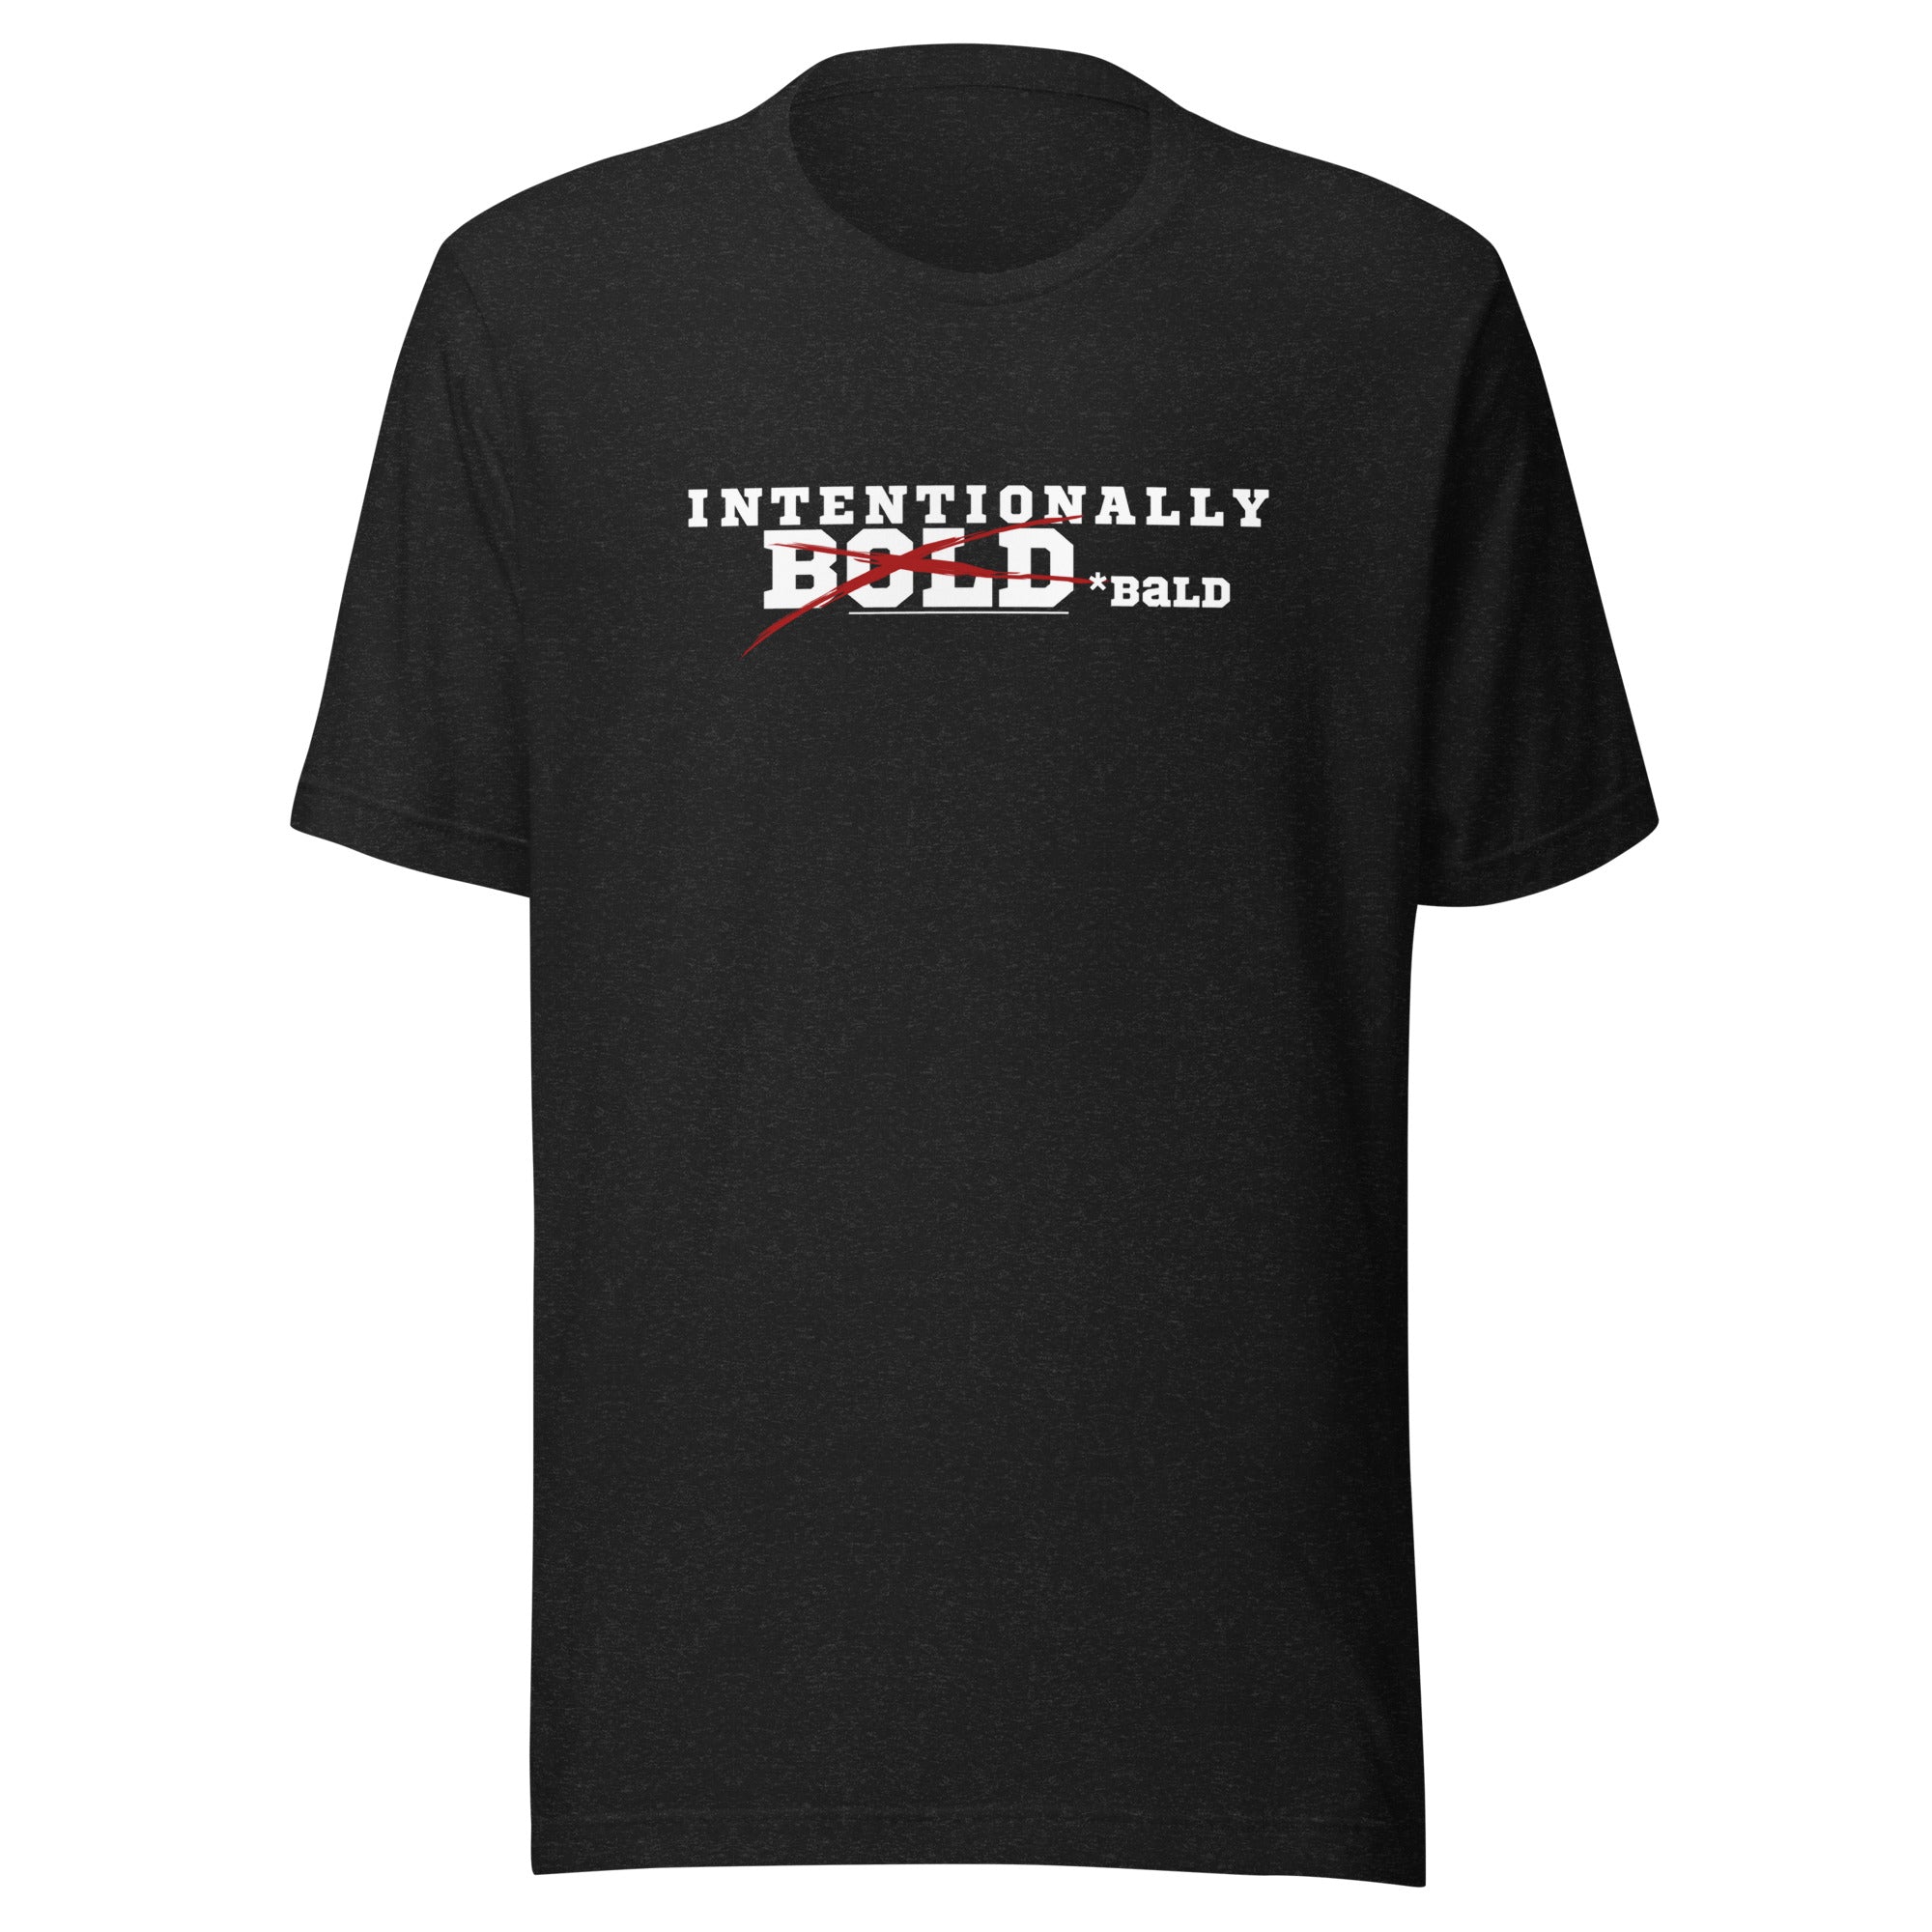 Intentionally Bold/Bald Unisex T-shirt